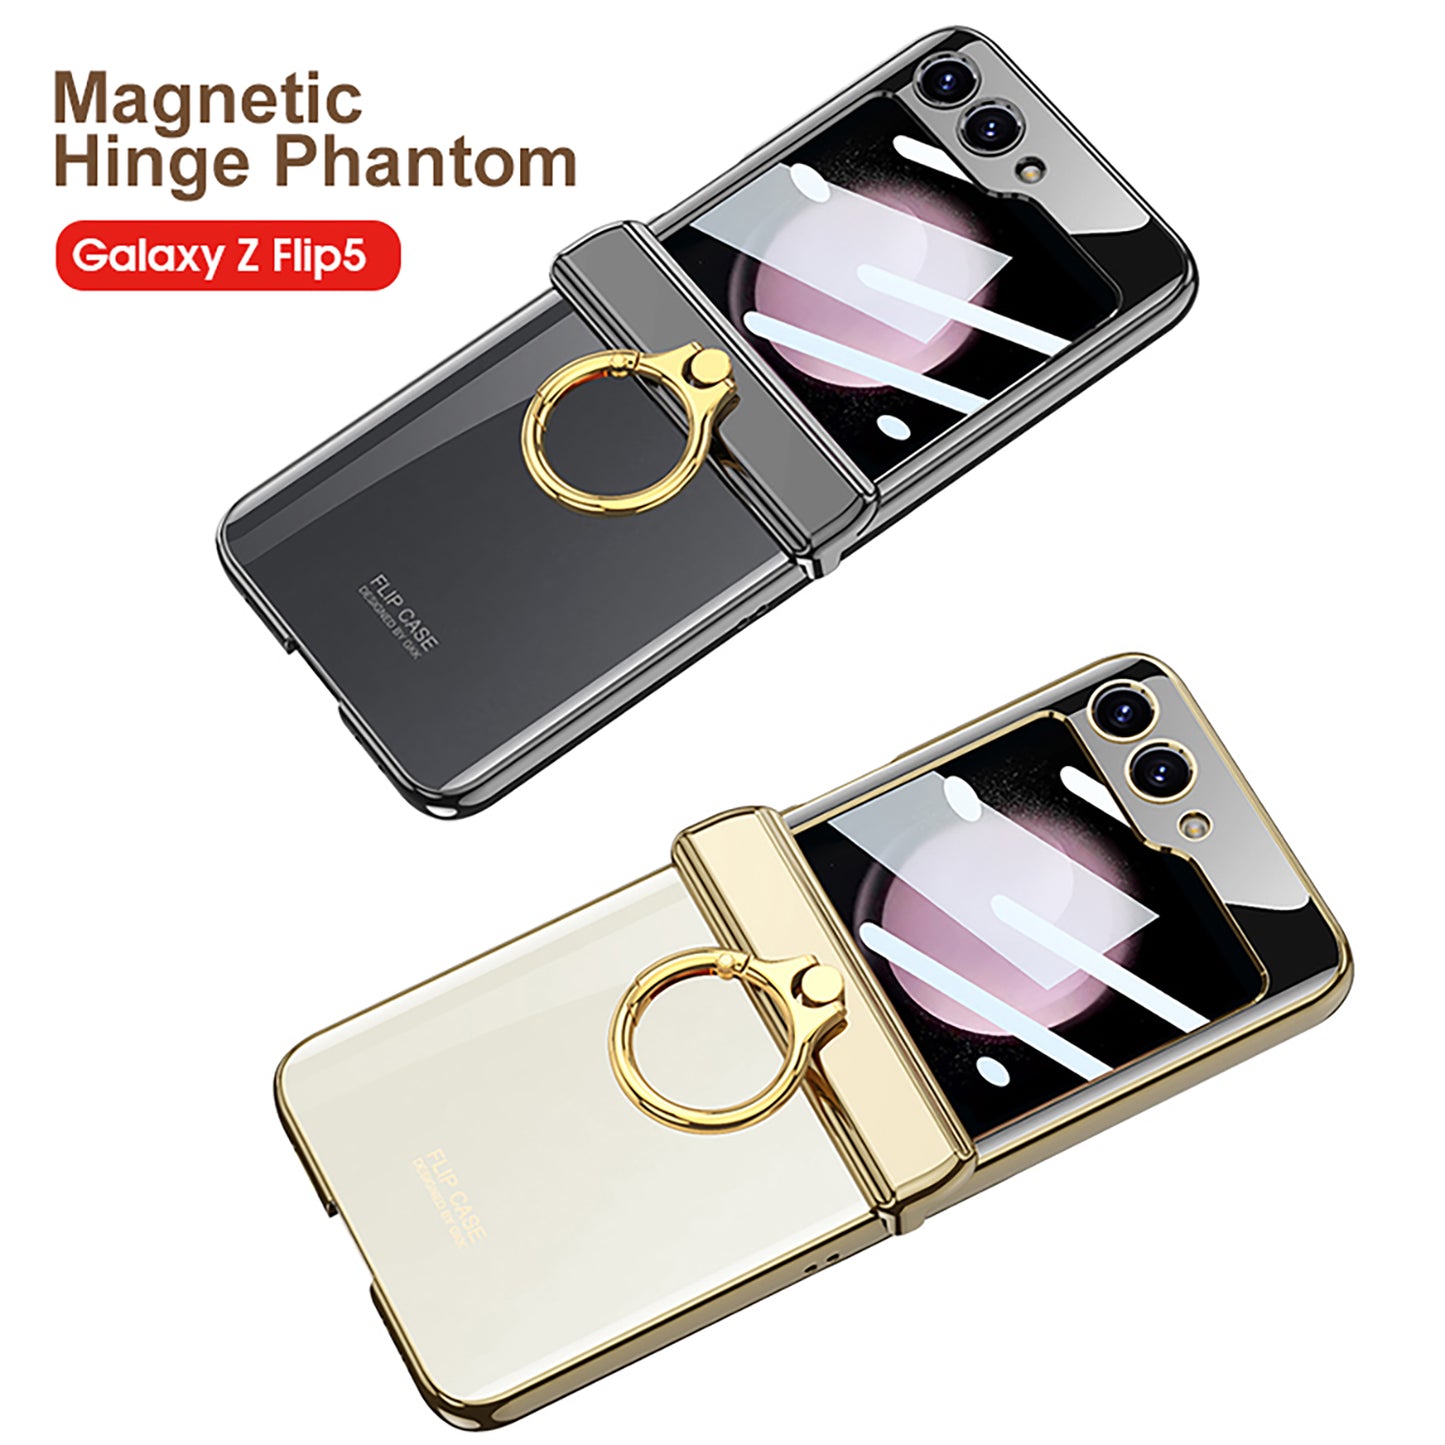 Magnetic Hinge Phantom Samsung Galaxy Z Flip5 Case with Ring Bracket